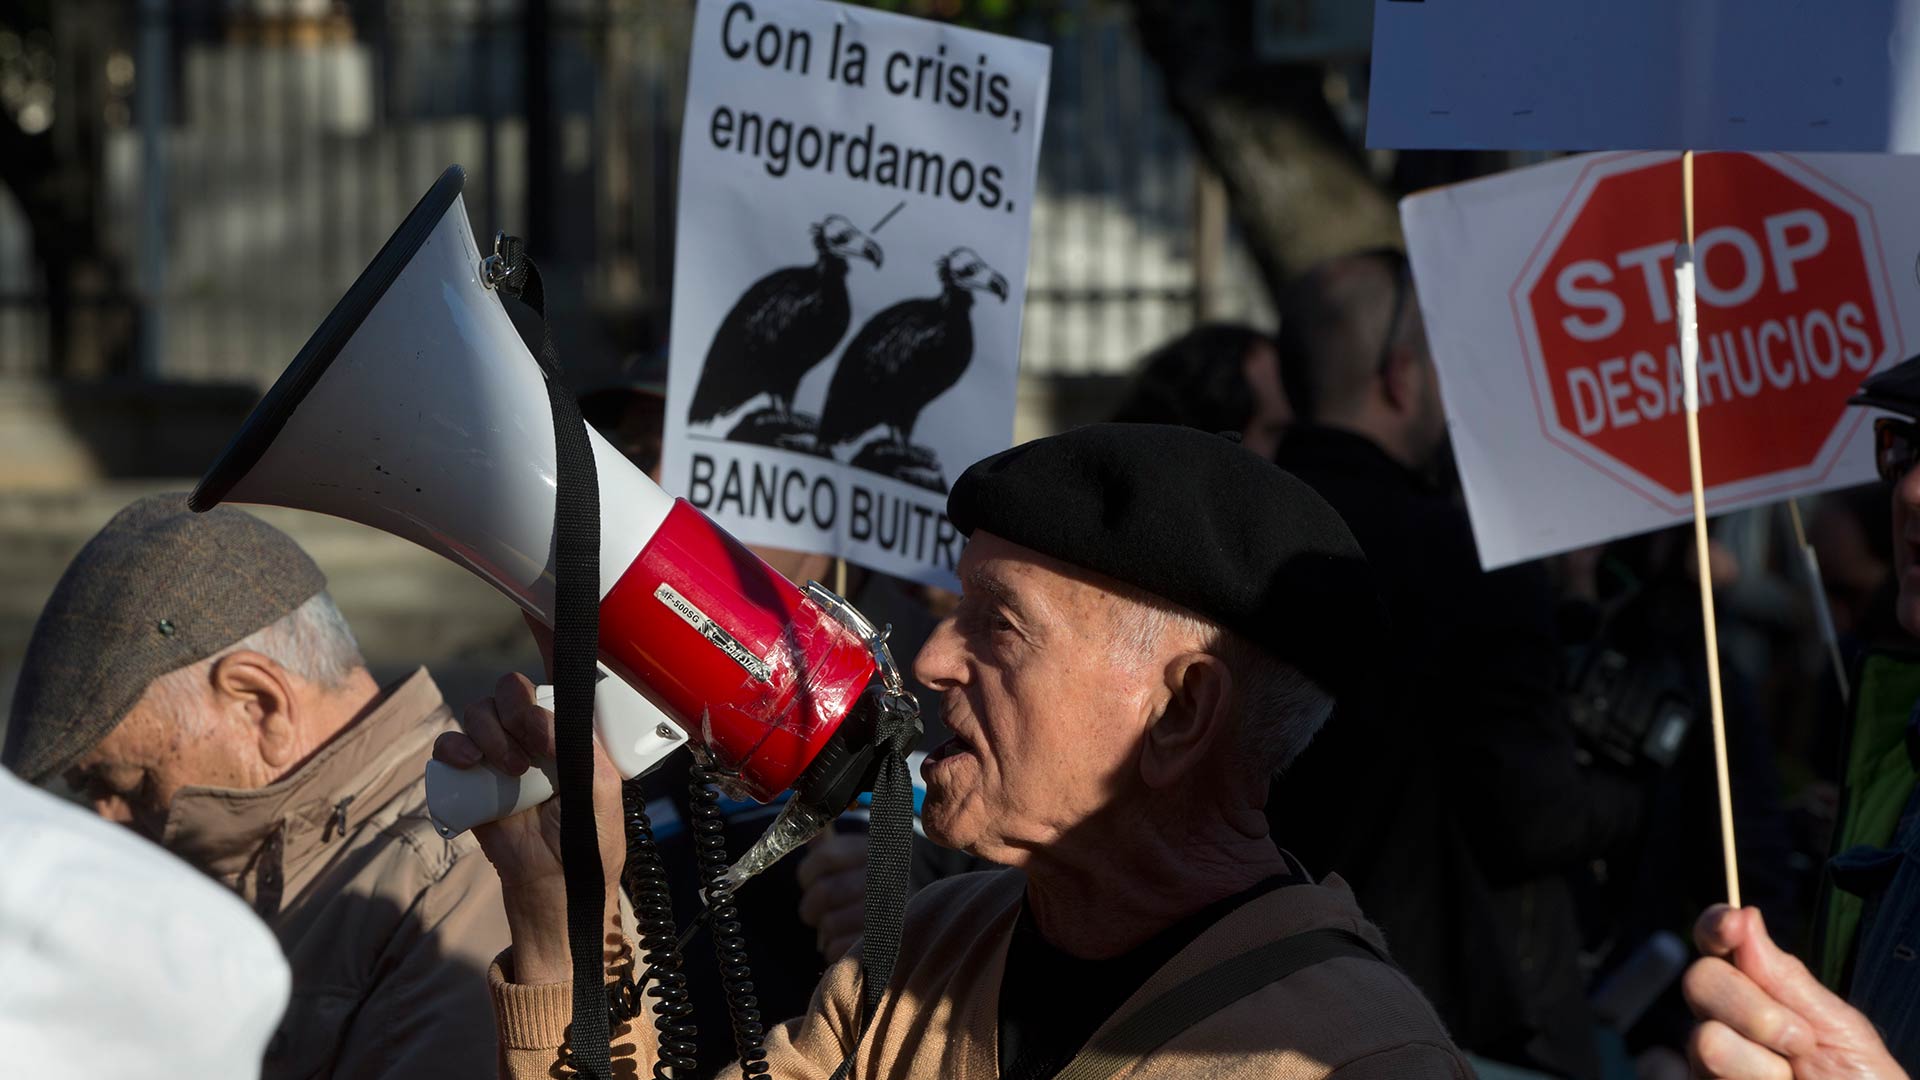 Los bancos deberán ofrecer alquiler social a familias vulnerables antes de desahuciarlas en Cataluña